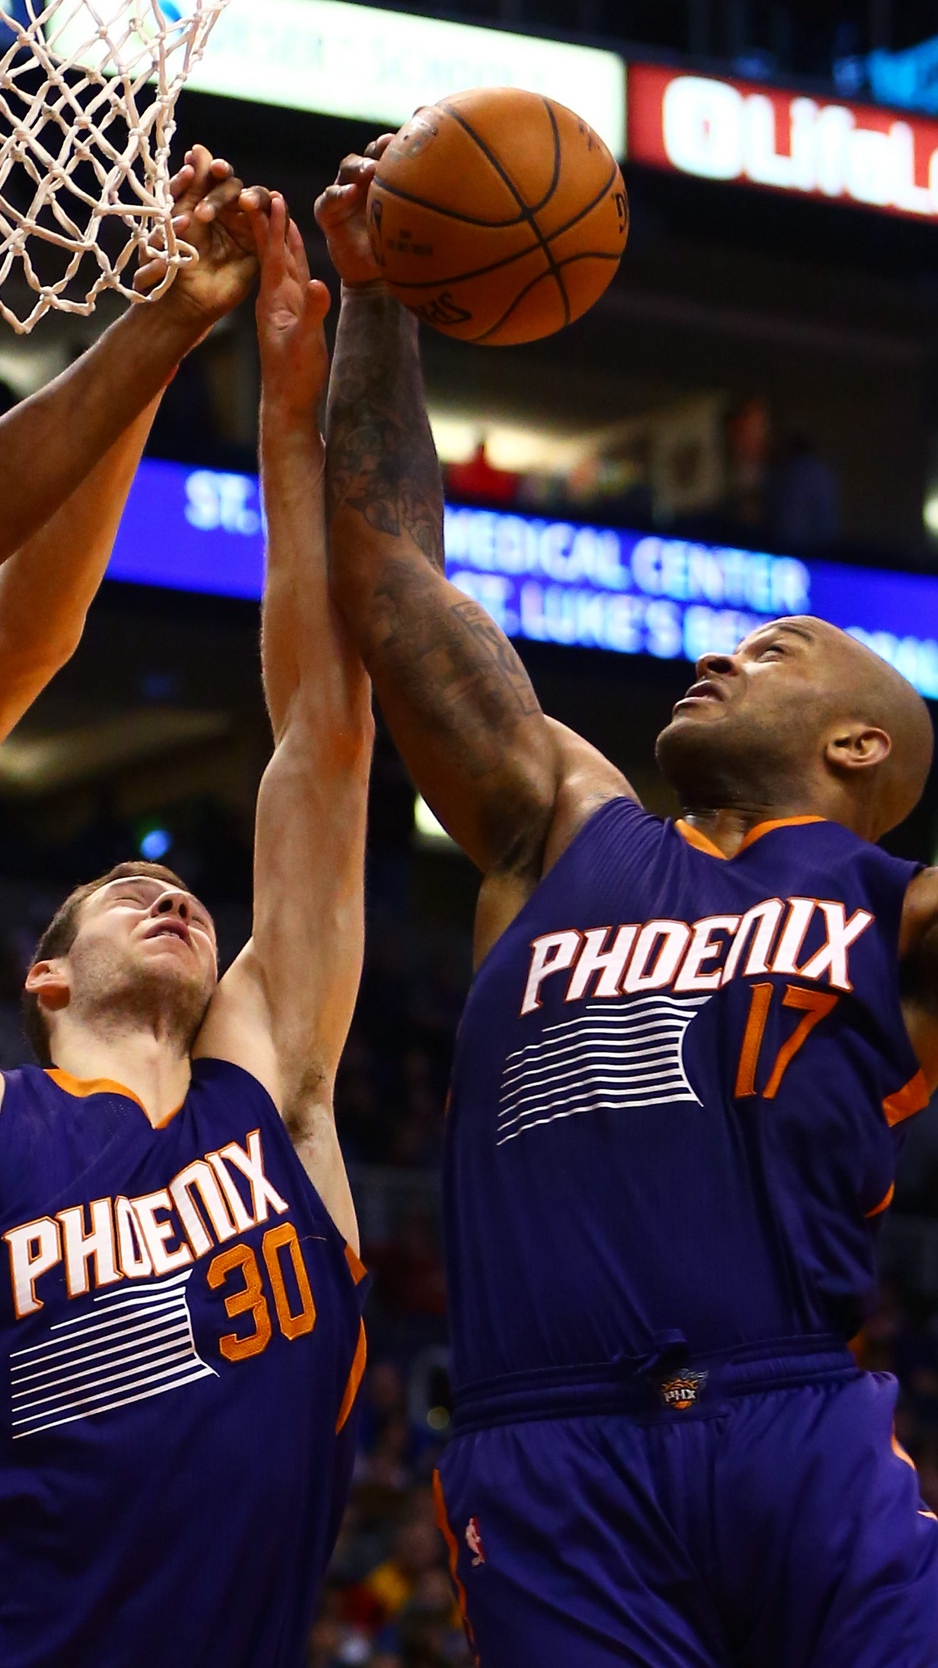 Wallpaper Los Angeles Lakers, Phoenix Suns, Basketball - Basketball Backgrounds Pheonix Suns - HD Wallpaper 